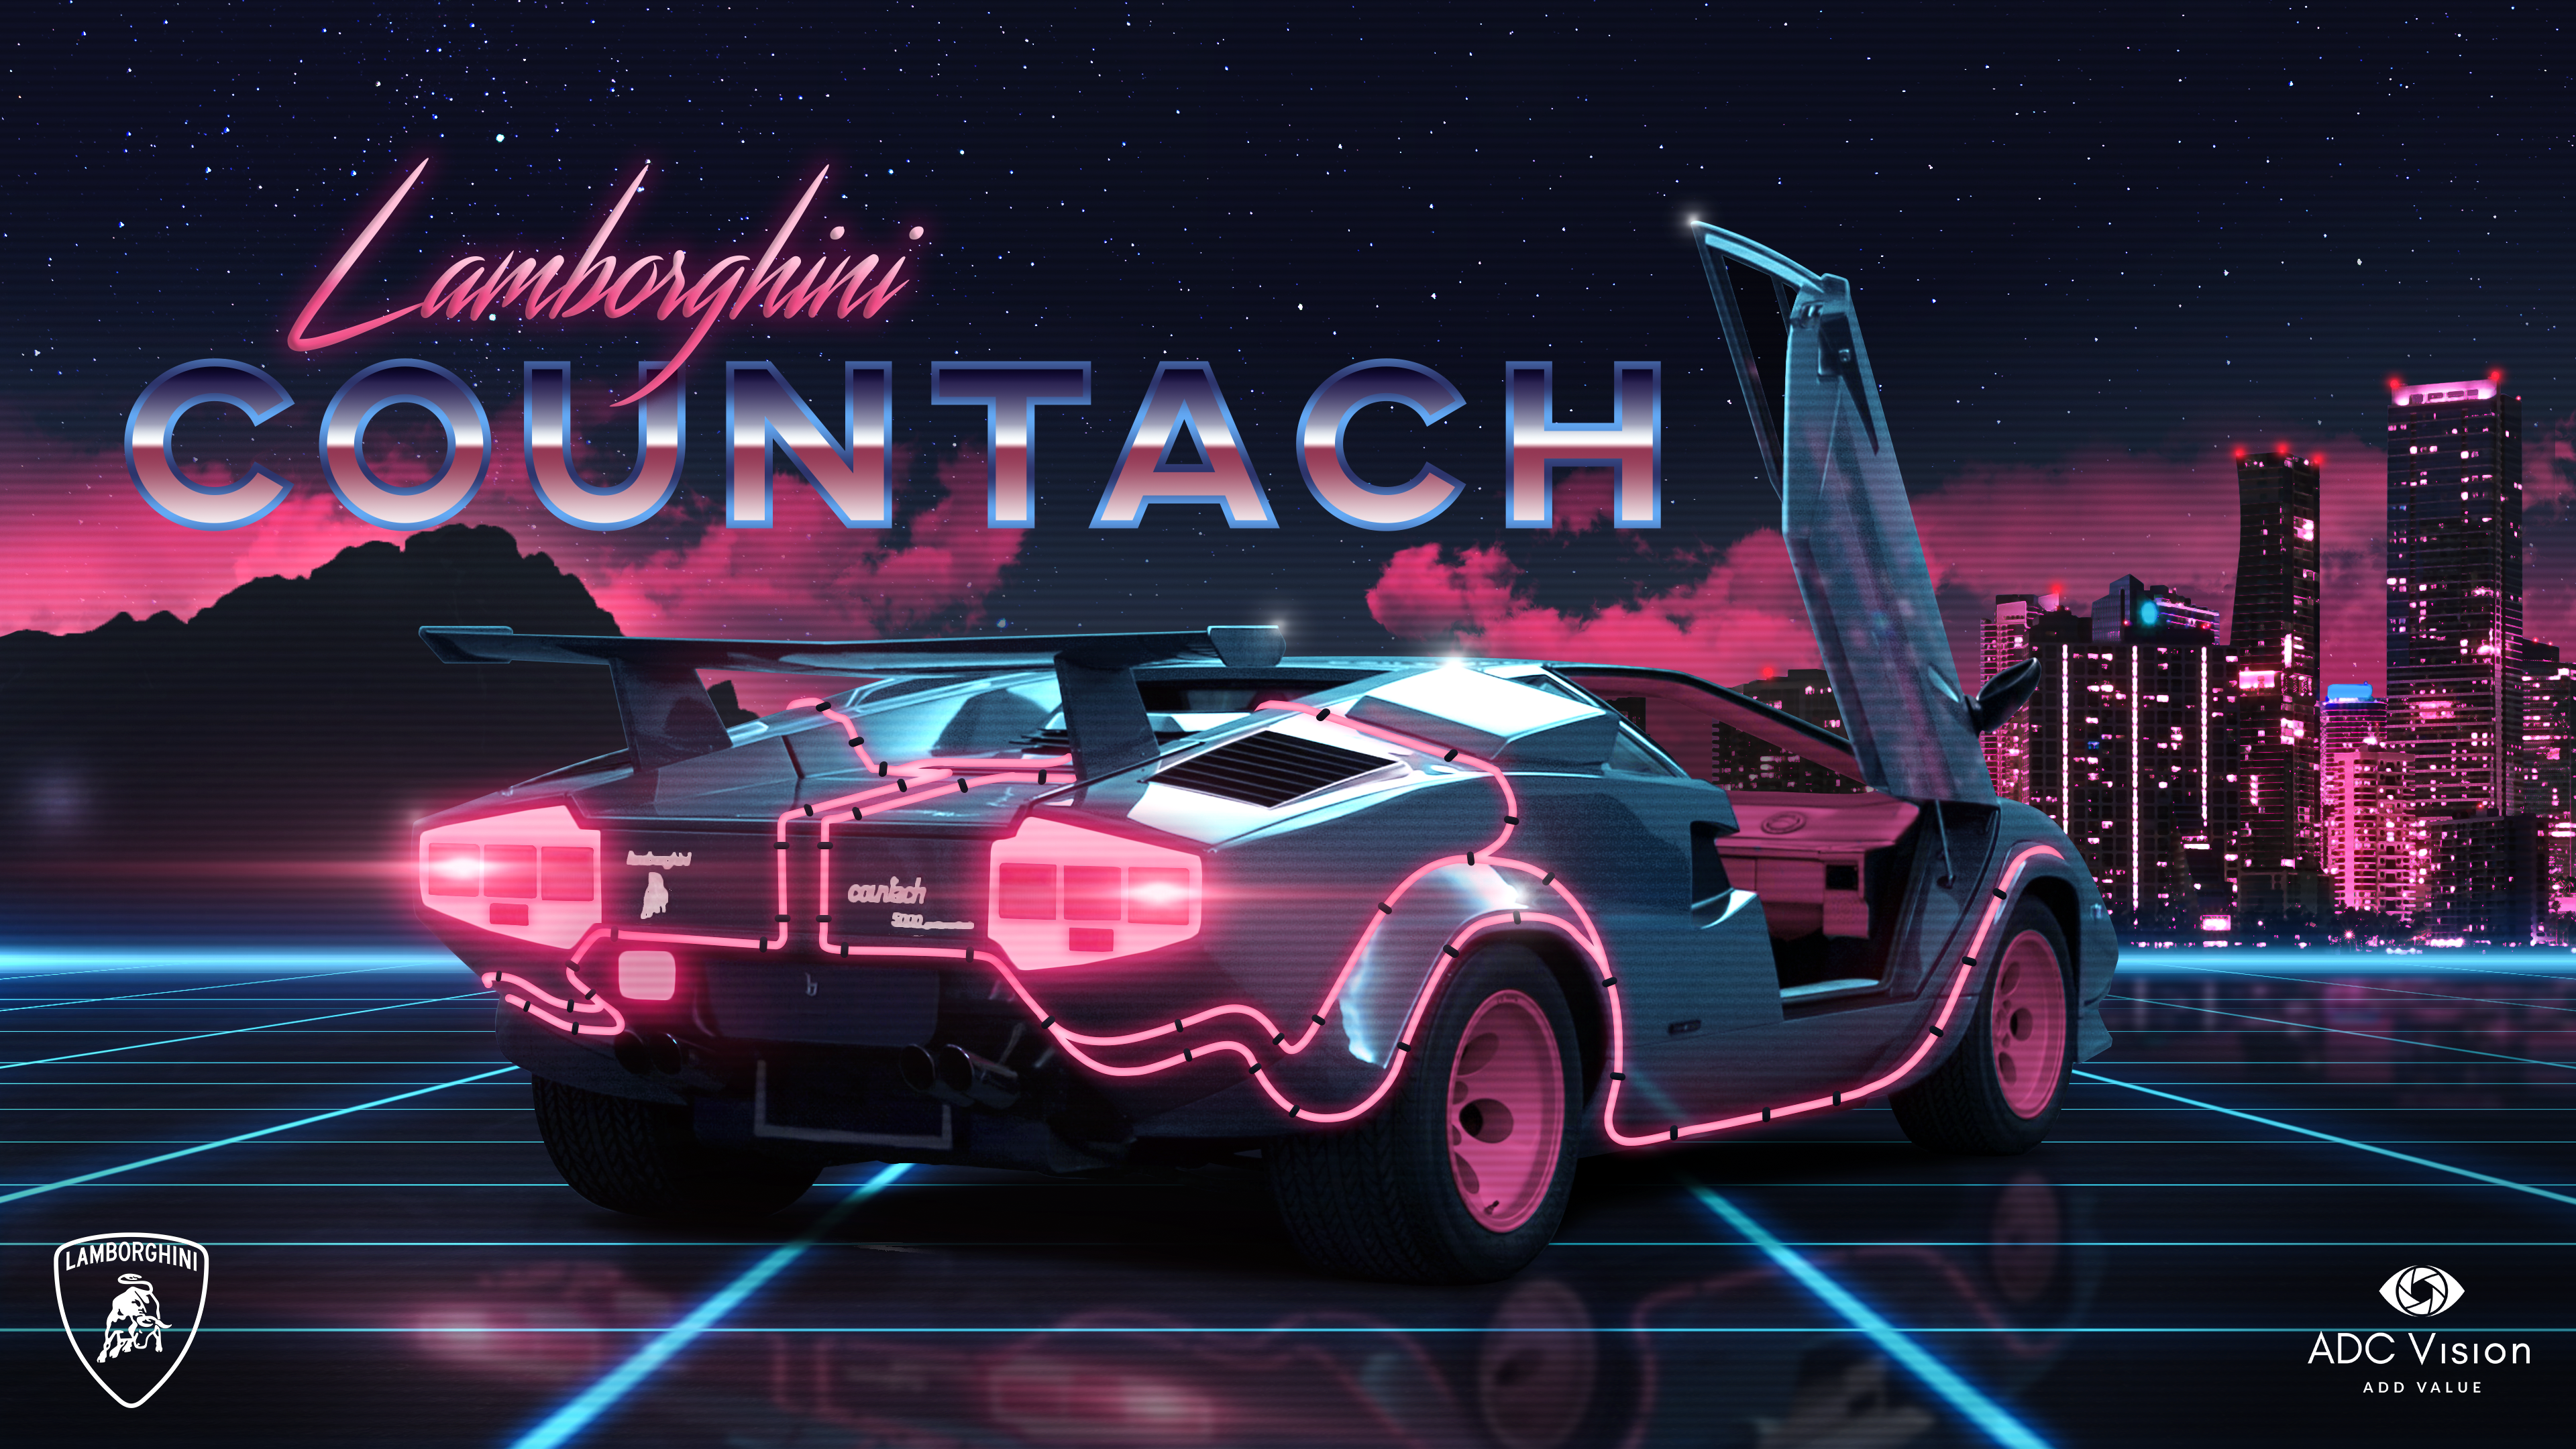 Lamborghini Countach 5000 Back to the future vibe [3840x2160]. Desktop background image, Lamborghini, Lamborghini countach